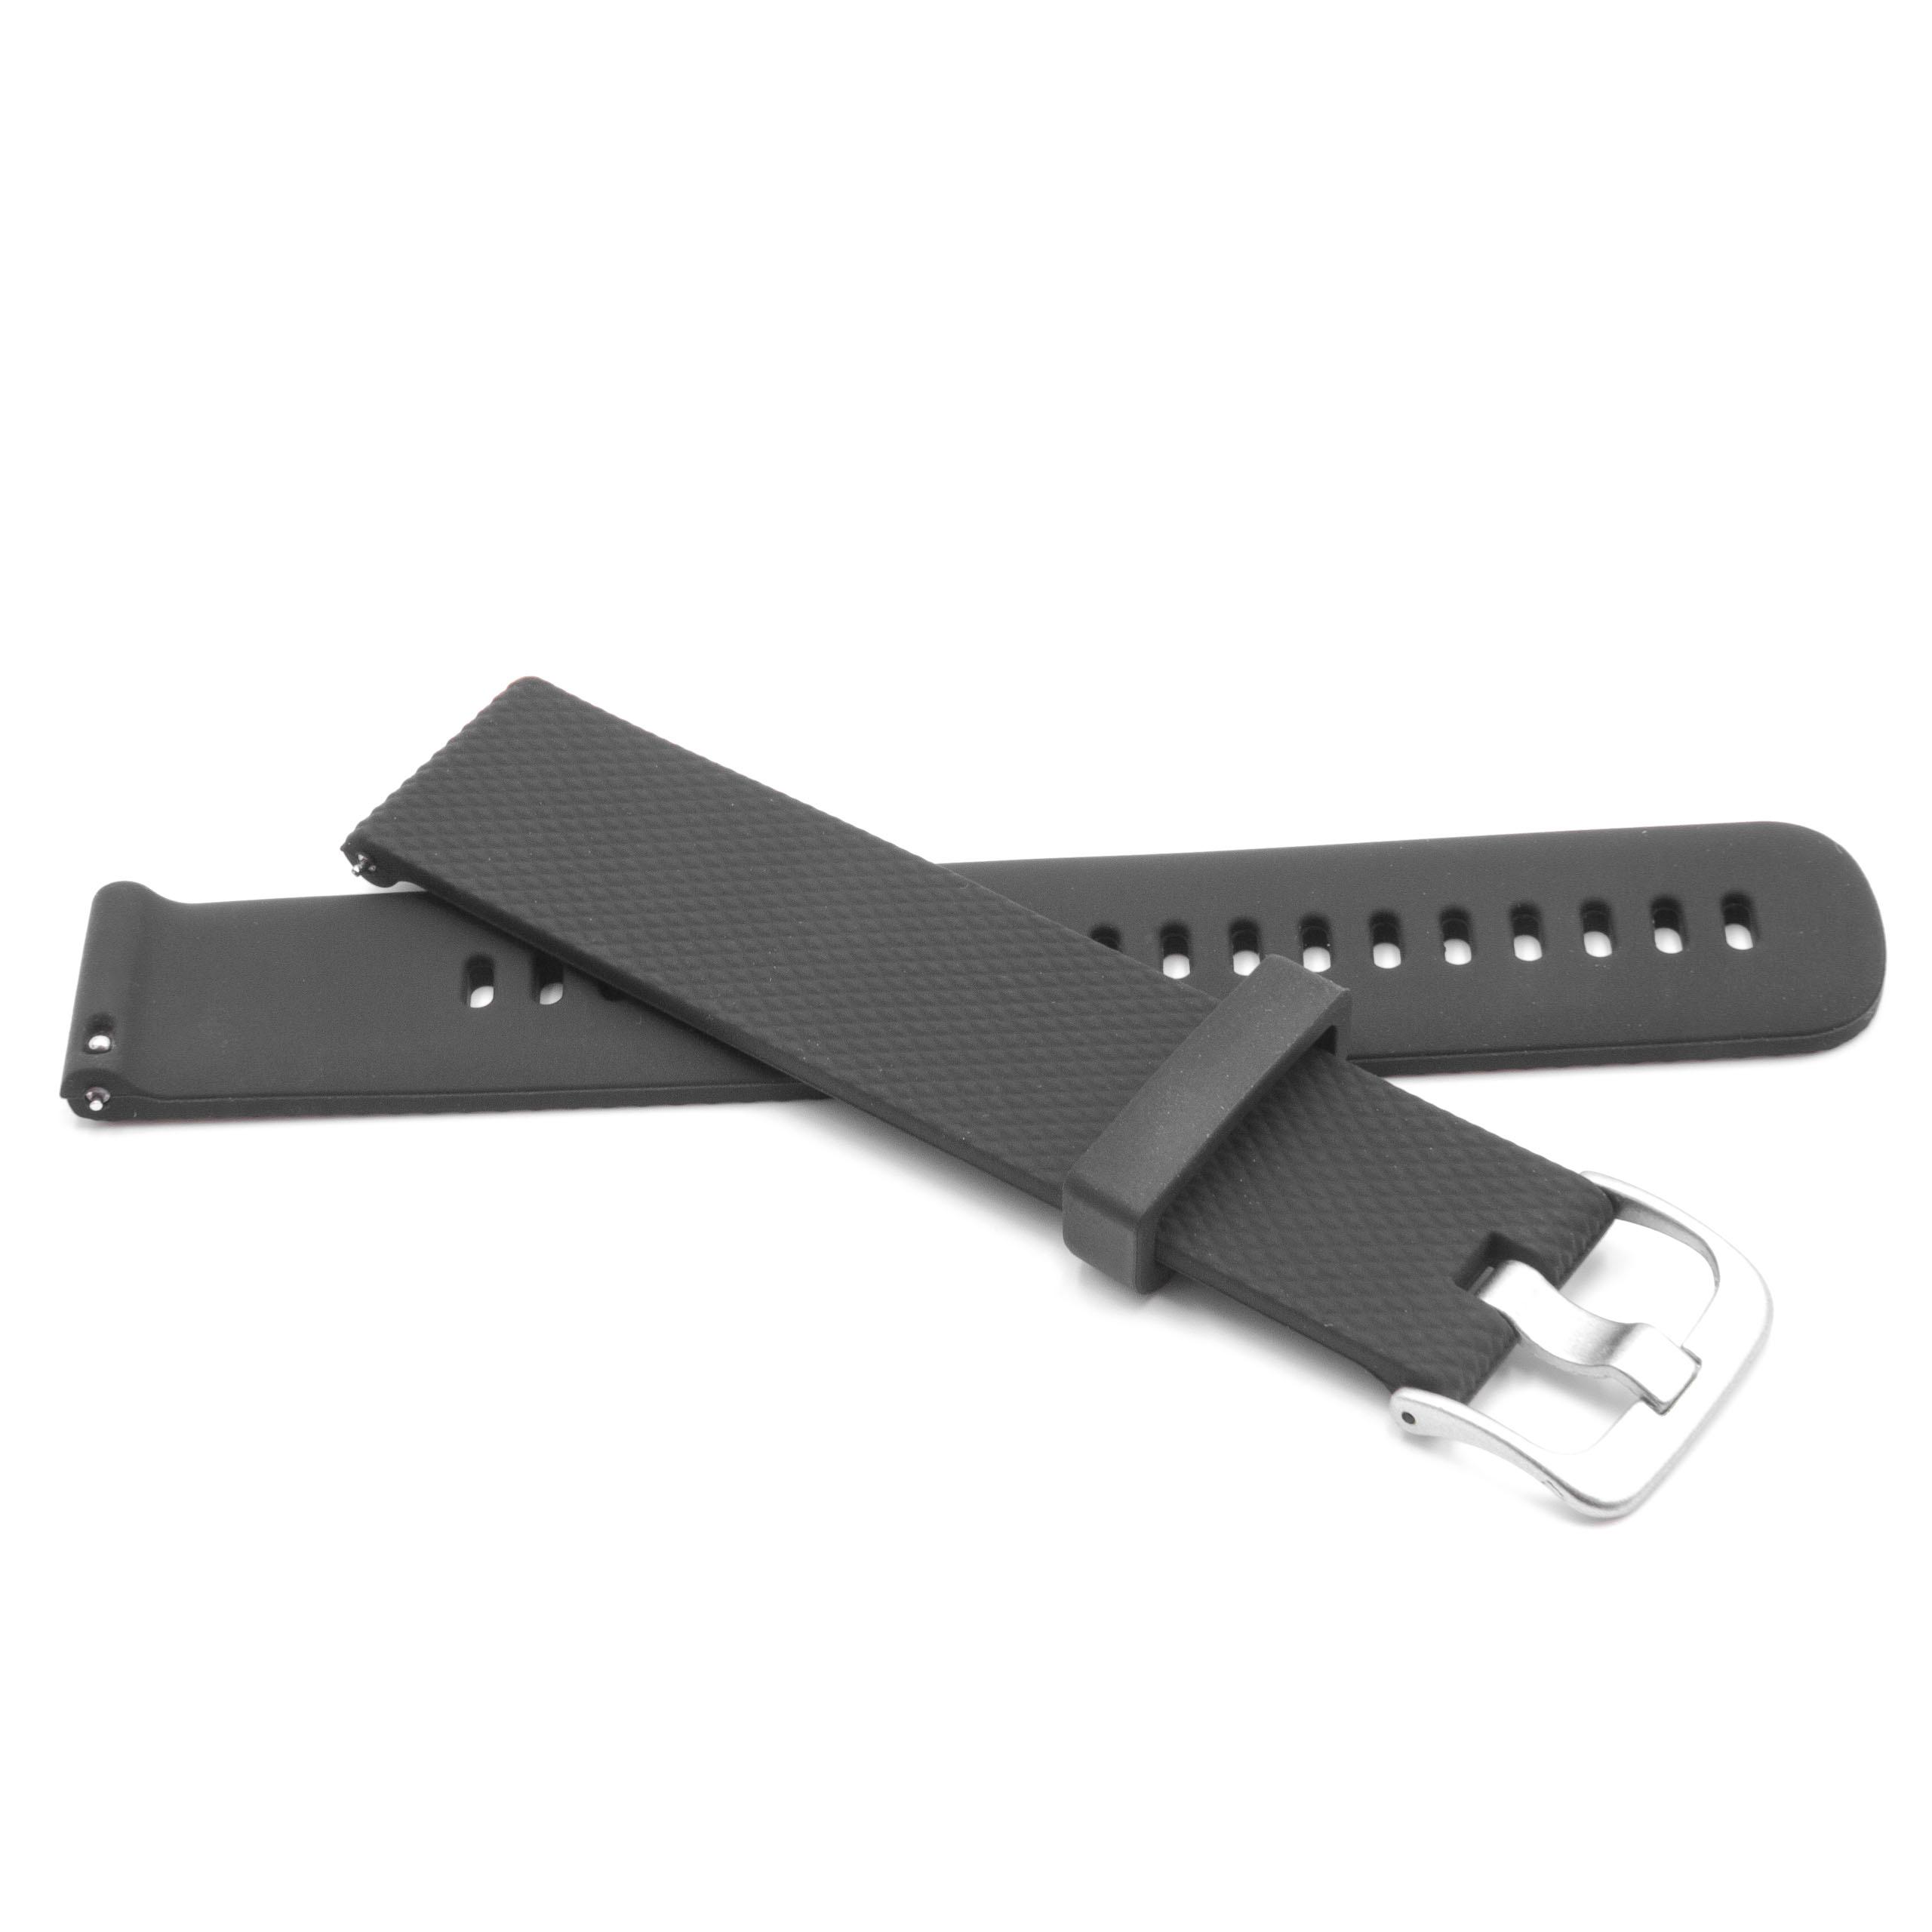 wristband for Garmin Smartwatch - 12.5 + 10.5 cm long, 20mm wide, silicone, black